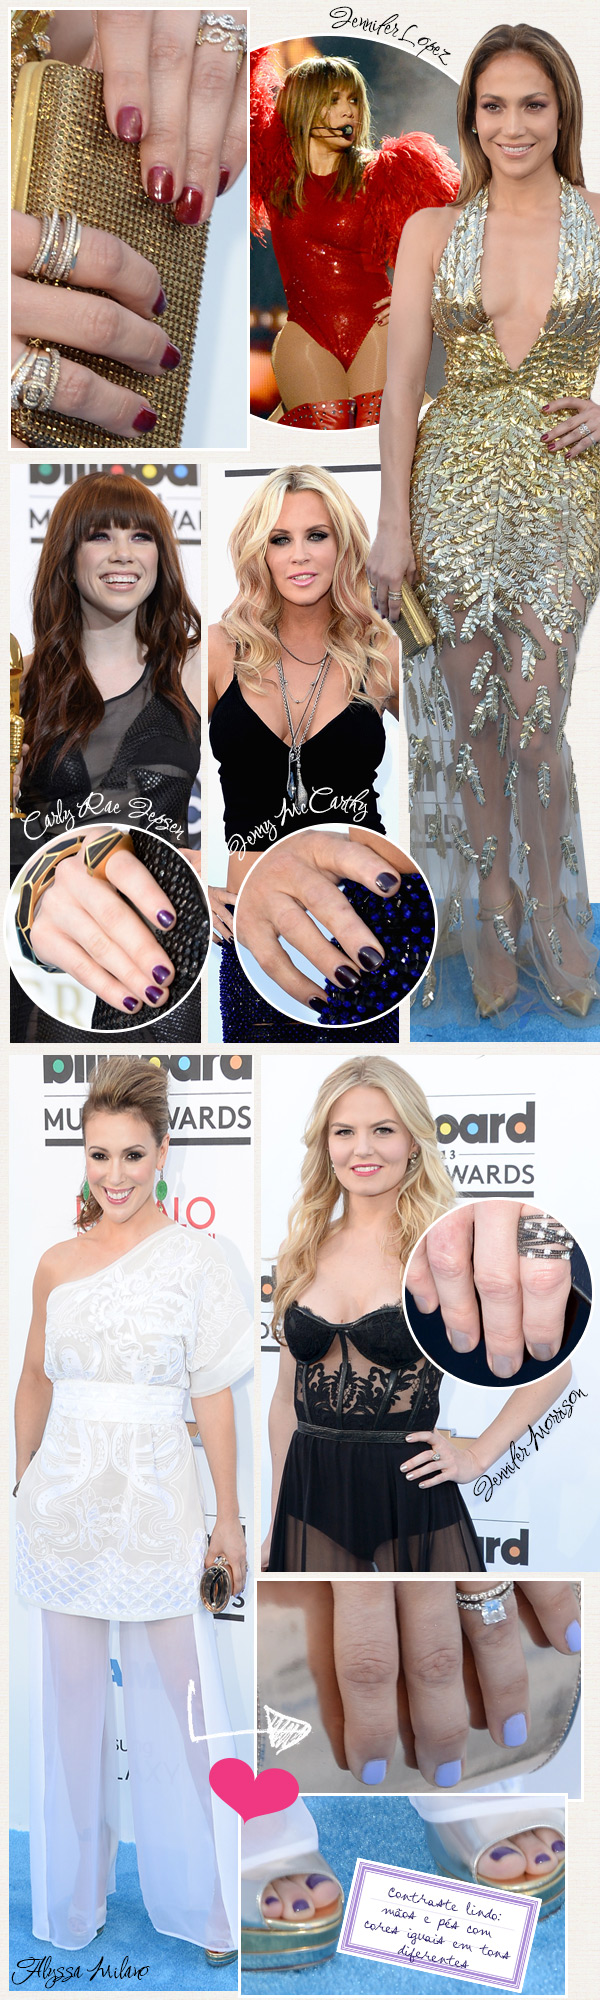 1-billboard-music-awards-2013-manicure